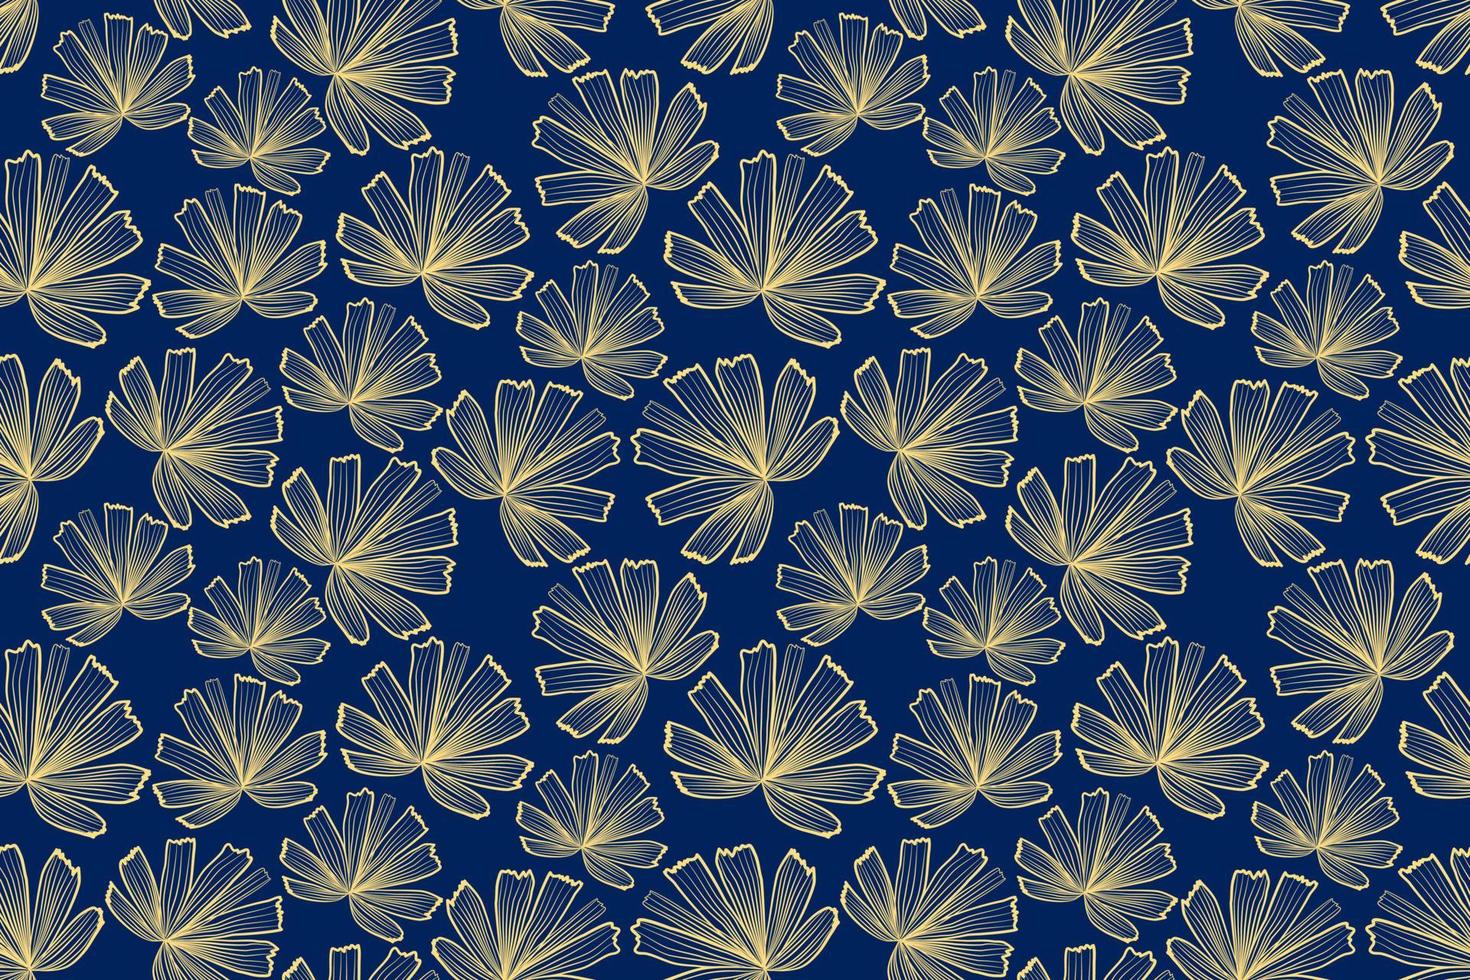 hojas sin costura modelo azul antecedentes mano dibujo vector ilustración para interior diseño fondo de pantalla, tela textiles